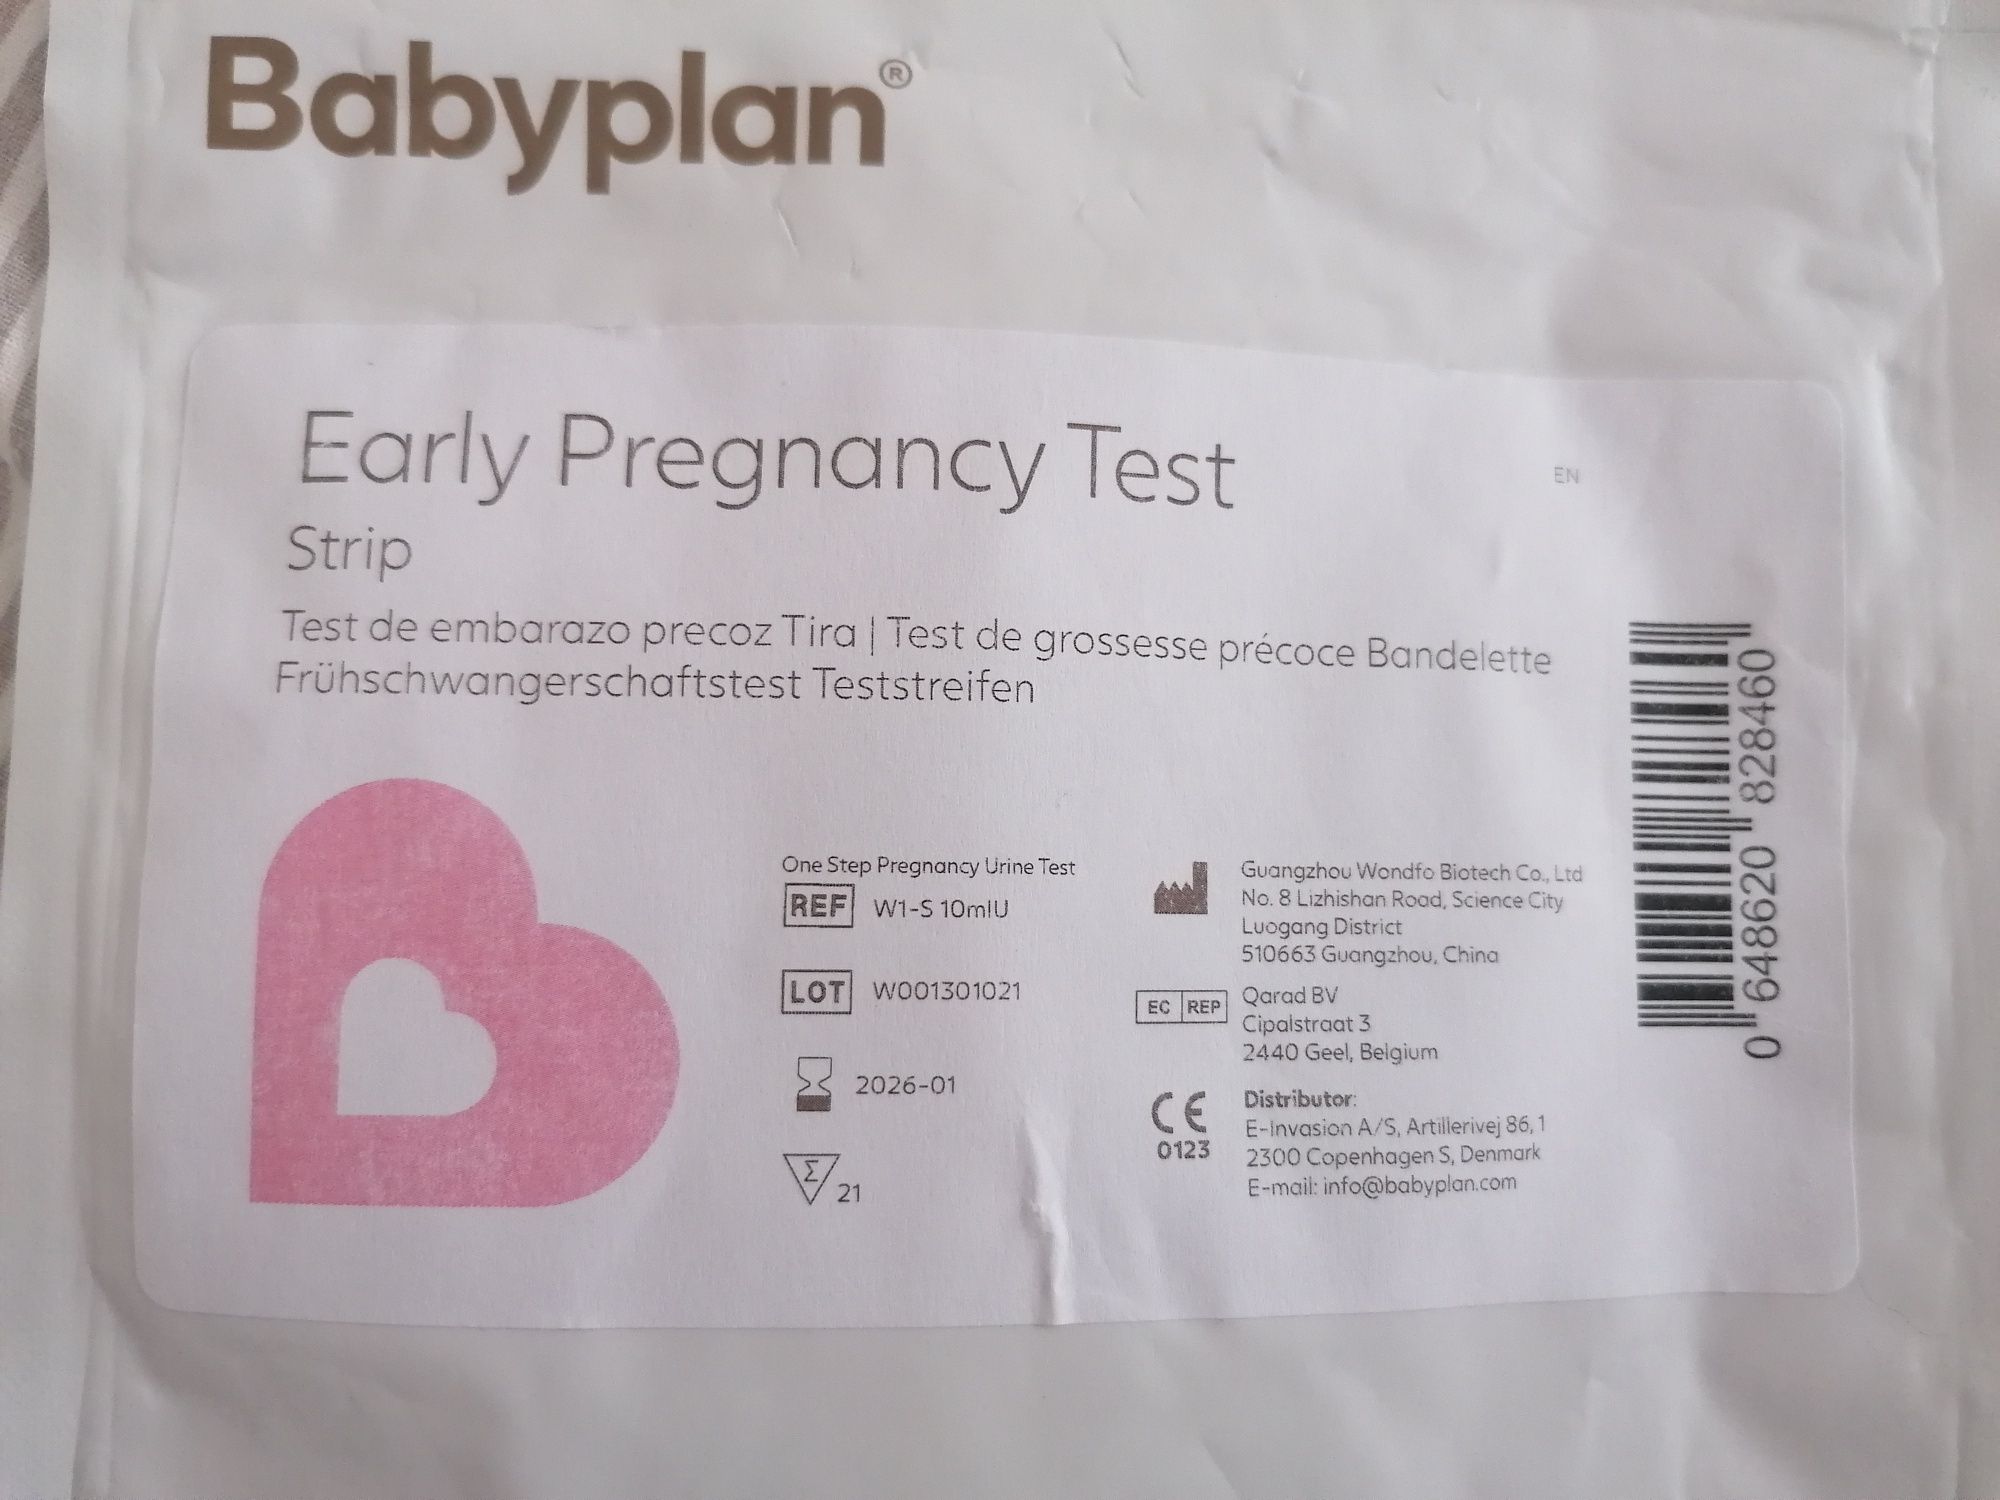 Testes de gravidez (10mIU)